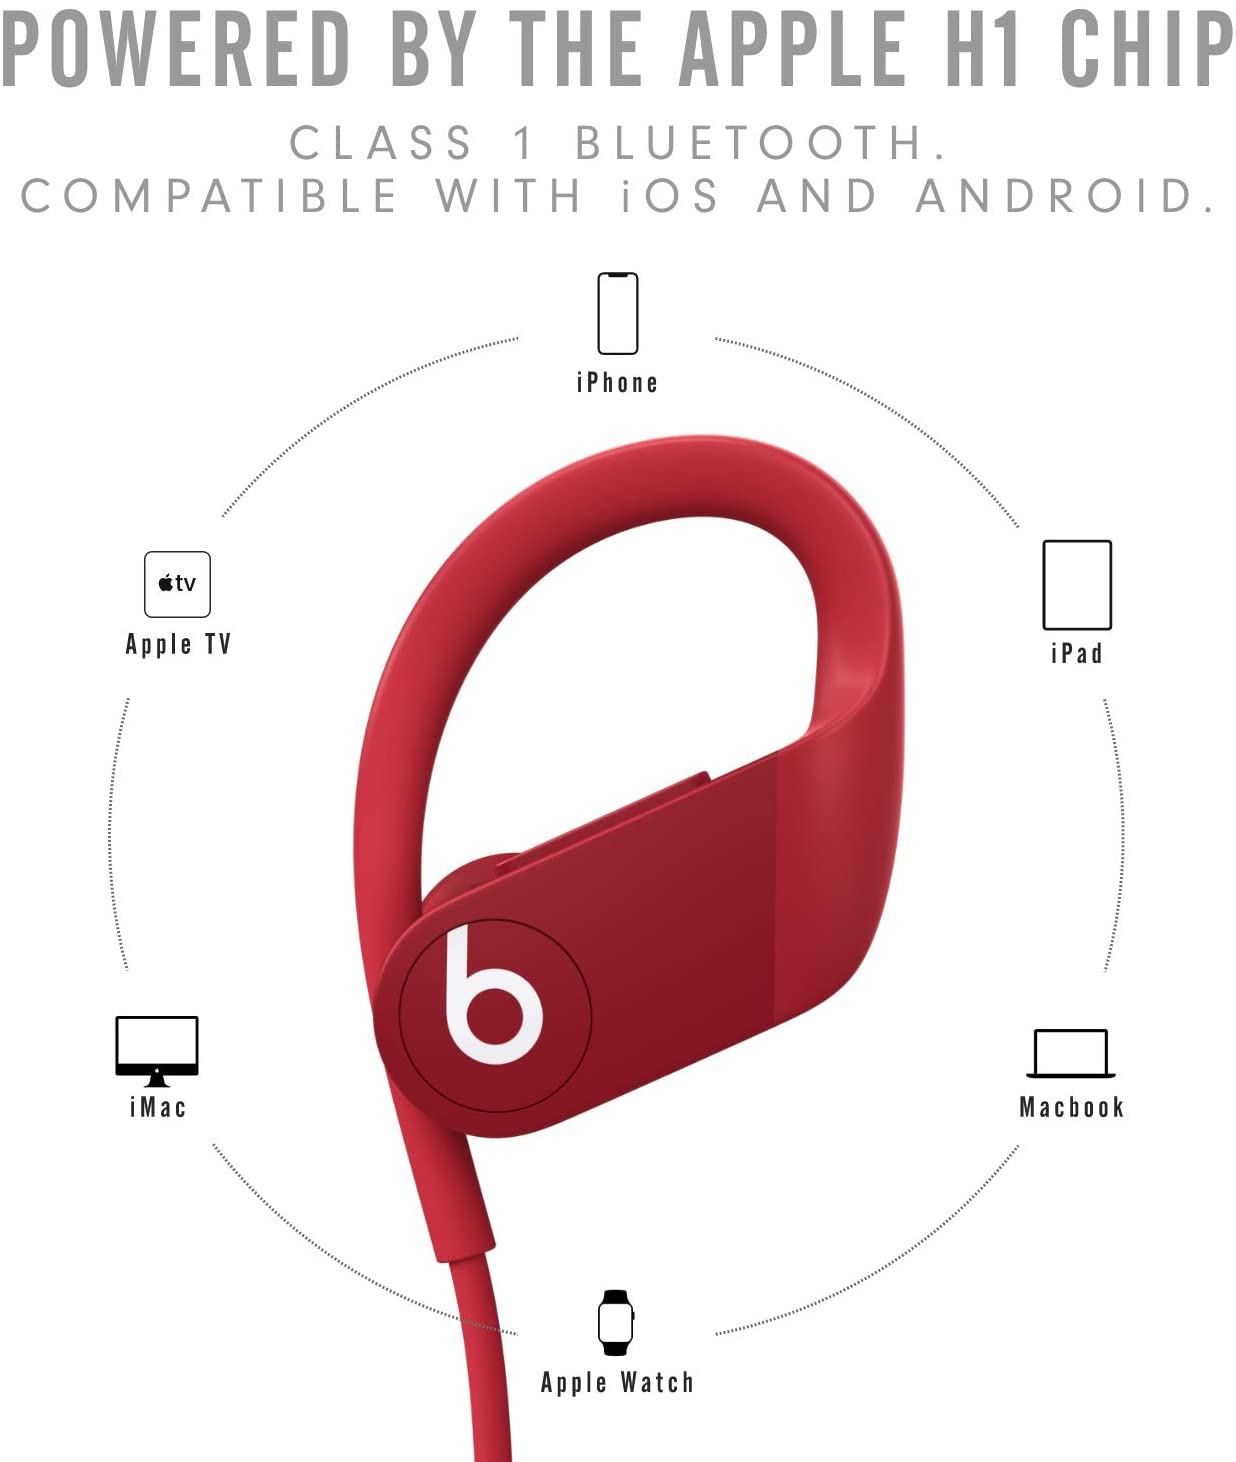 beats powerbeats,high performance,หูฟัง wireless,กันนํ้า ipx4,apple,apple h1,bluetooth class 1,iOS,Android,บีท,พาวเวอร์บีท,เบสหนัก,เสียงดี,หูฟังออกกำลังกาย